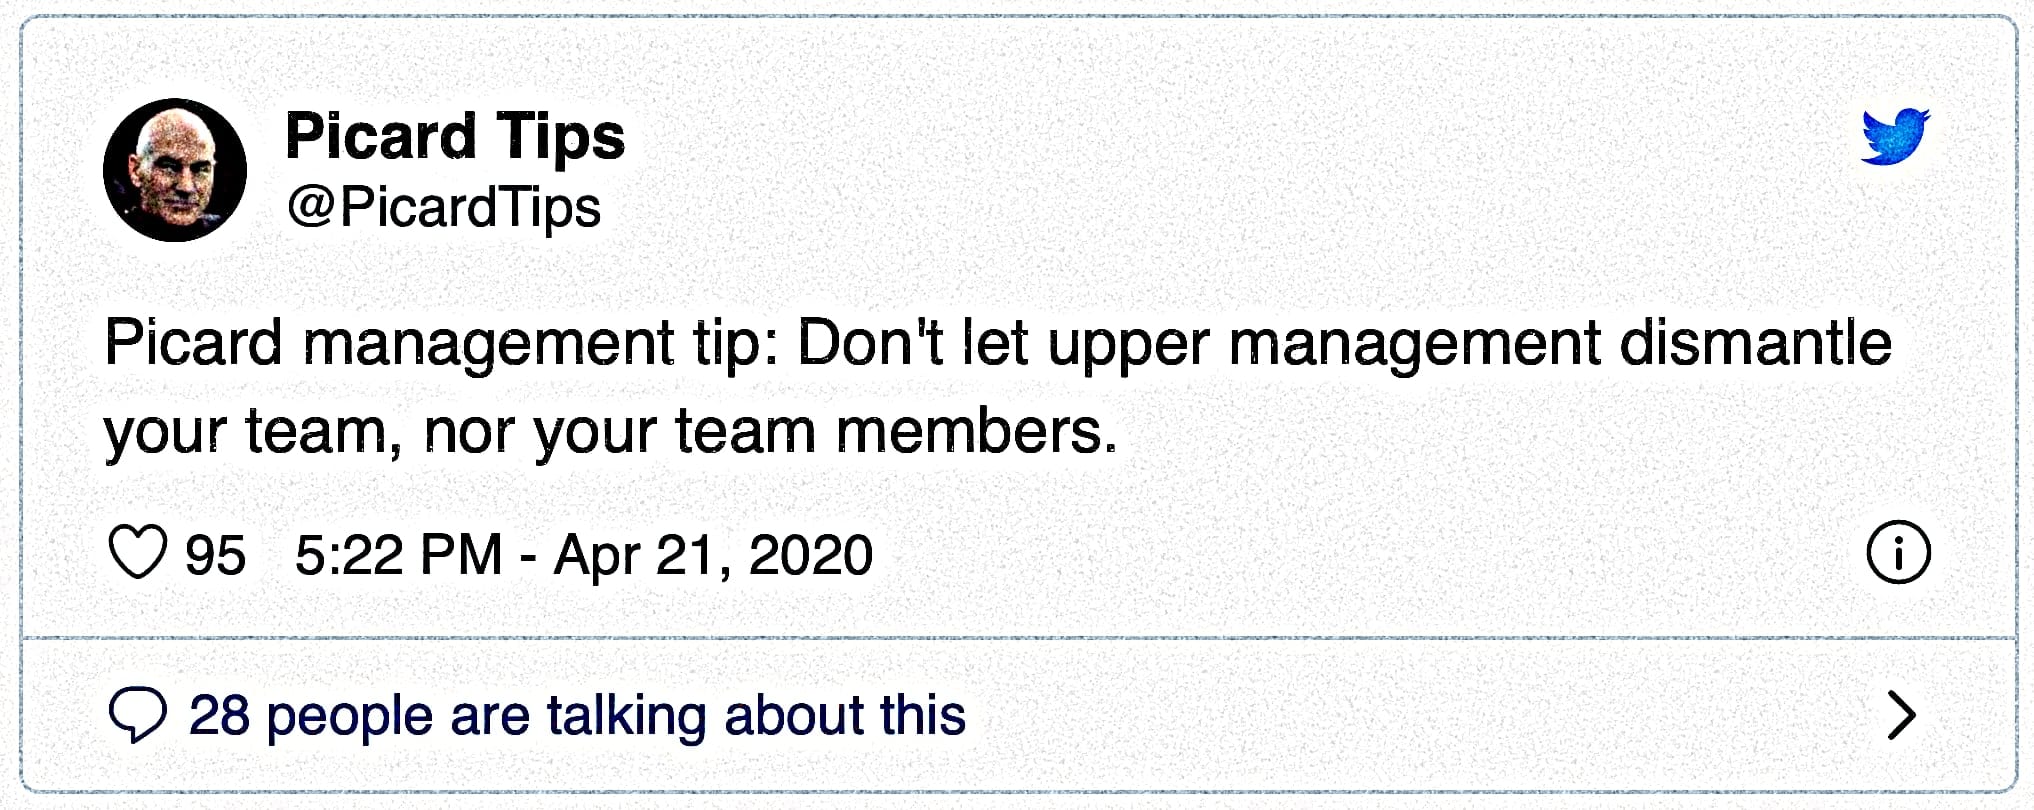 Picard management tip: Don't let upper management dismantle your team, nor your team members.